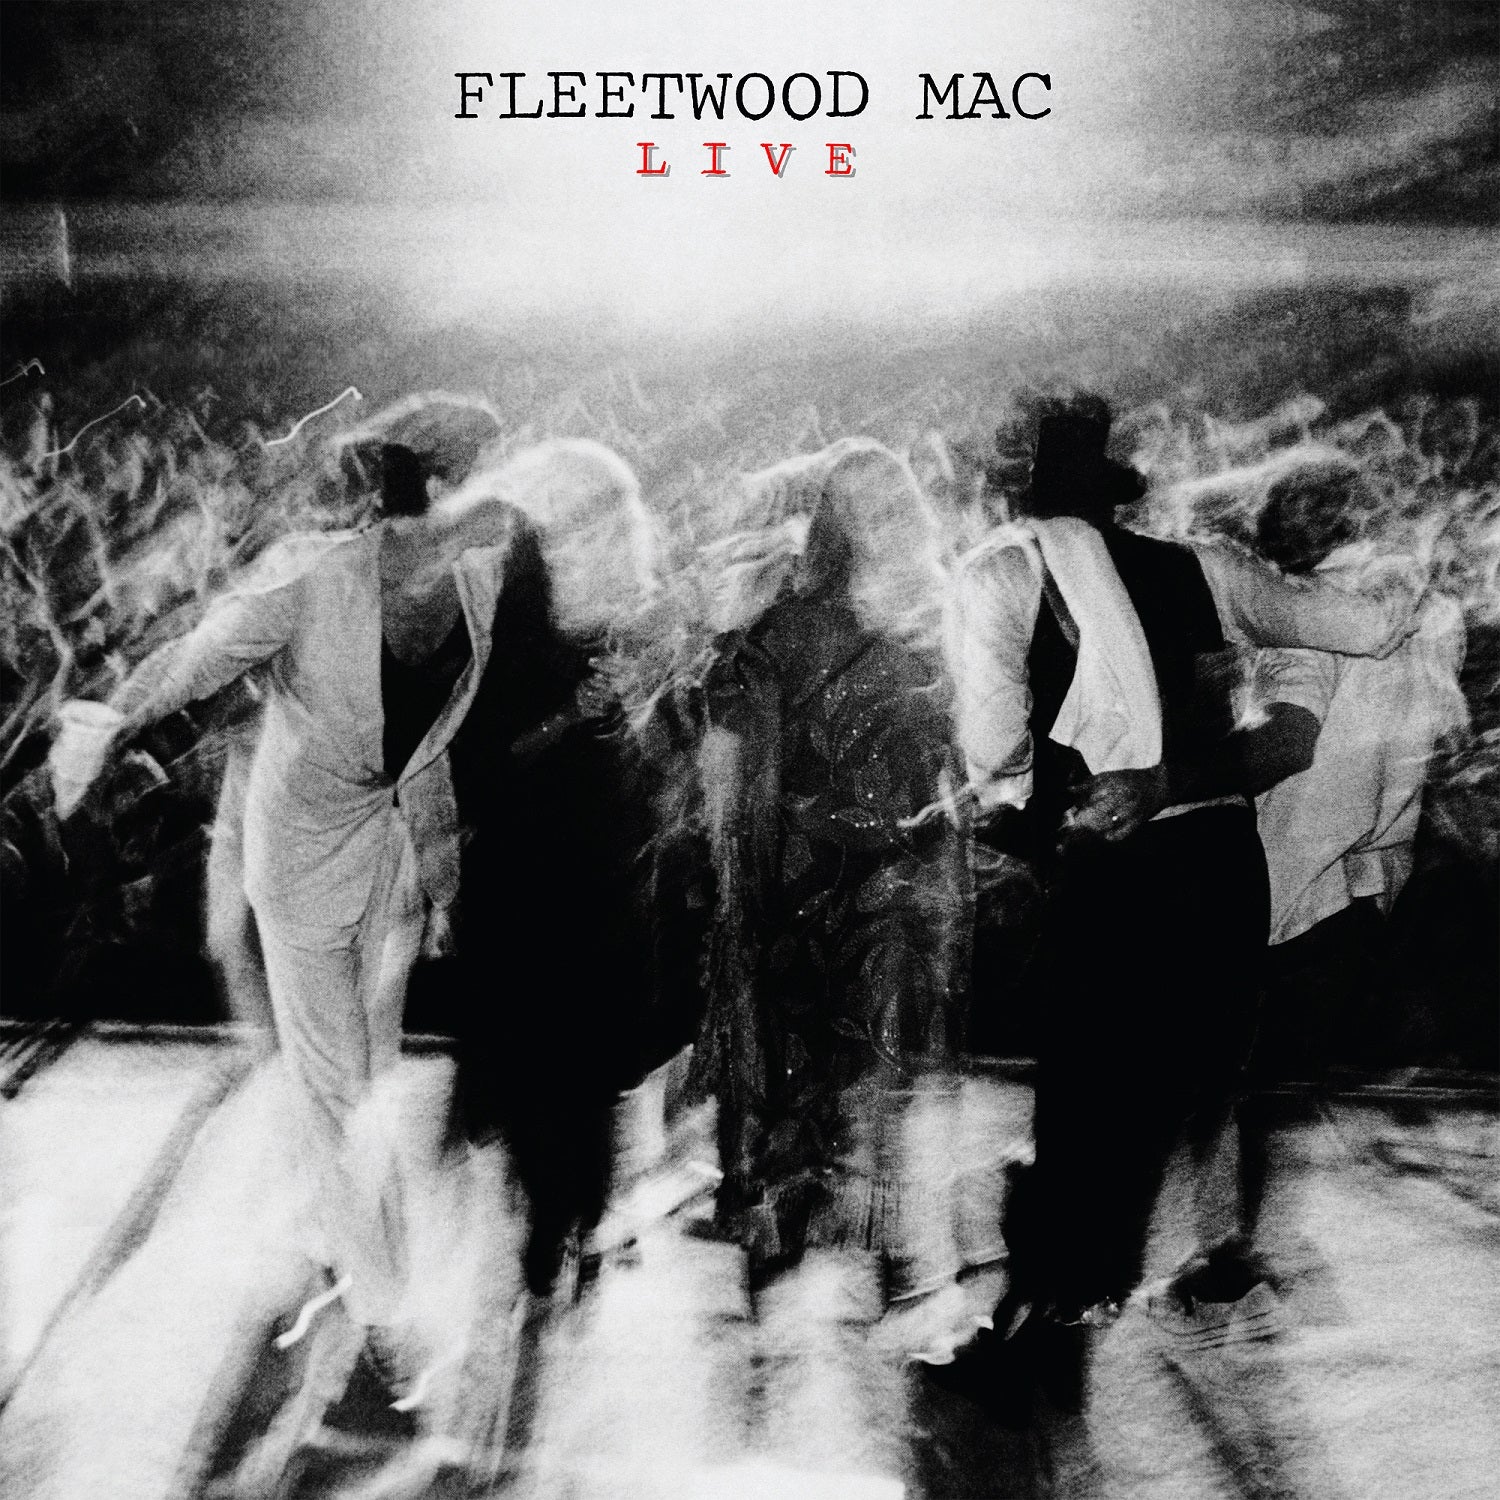 Fleetwood Mac - Fleetwood Mac Live (Super Deluxe Edition) (Rhino)